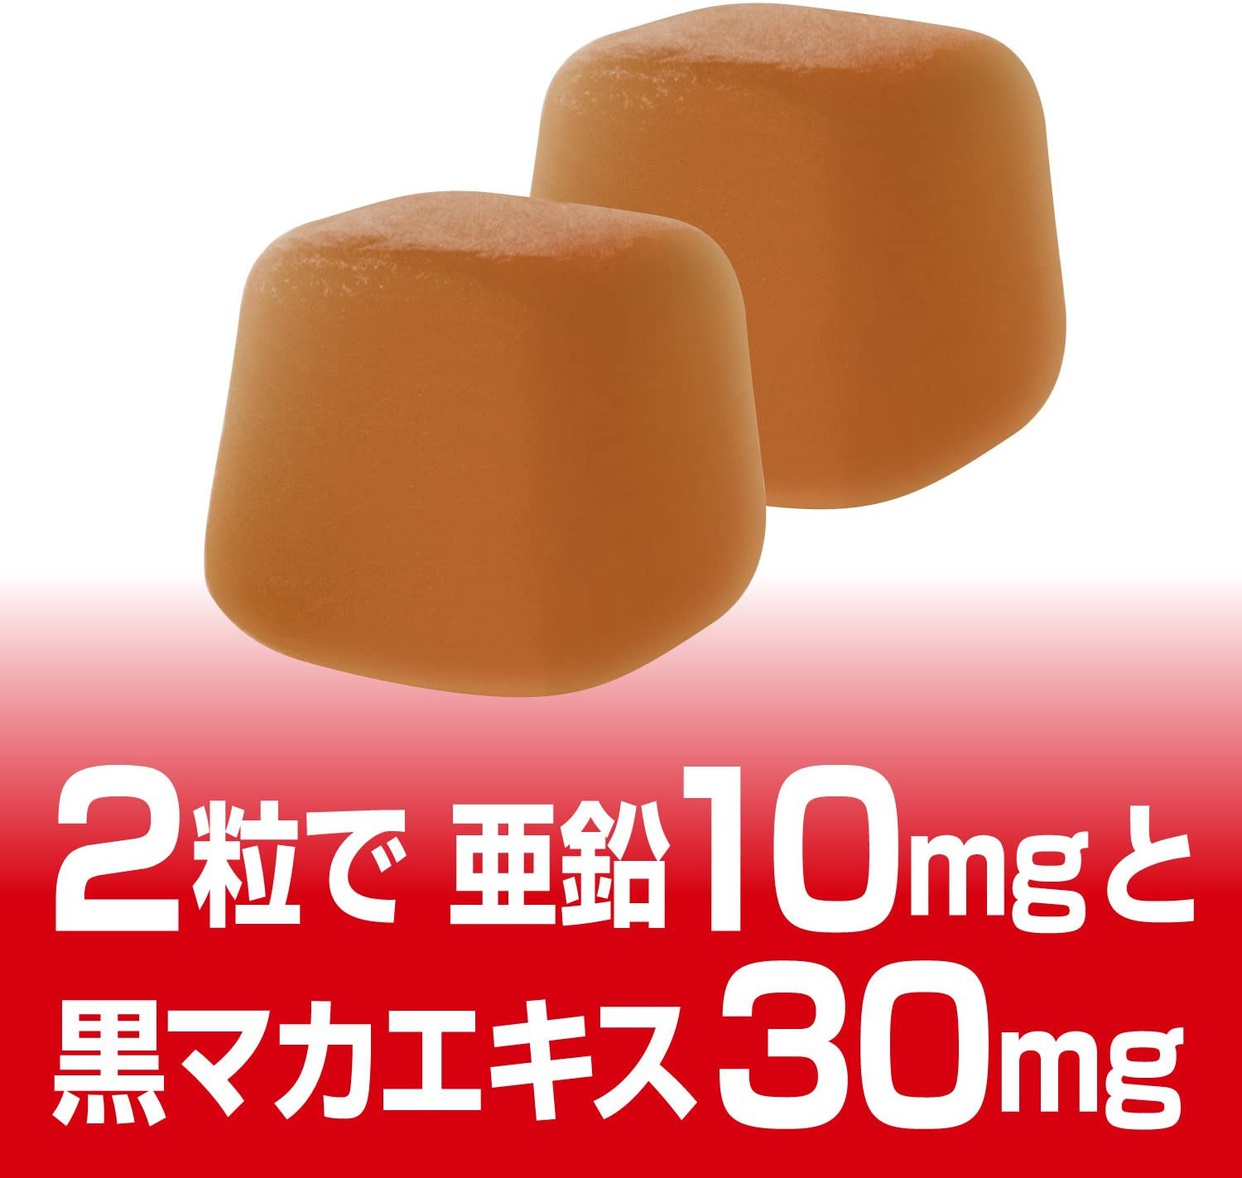 UHA味覚糖 グミサプリ 亜鉛&マカの商品画像4 